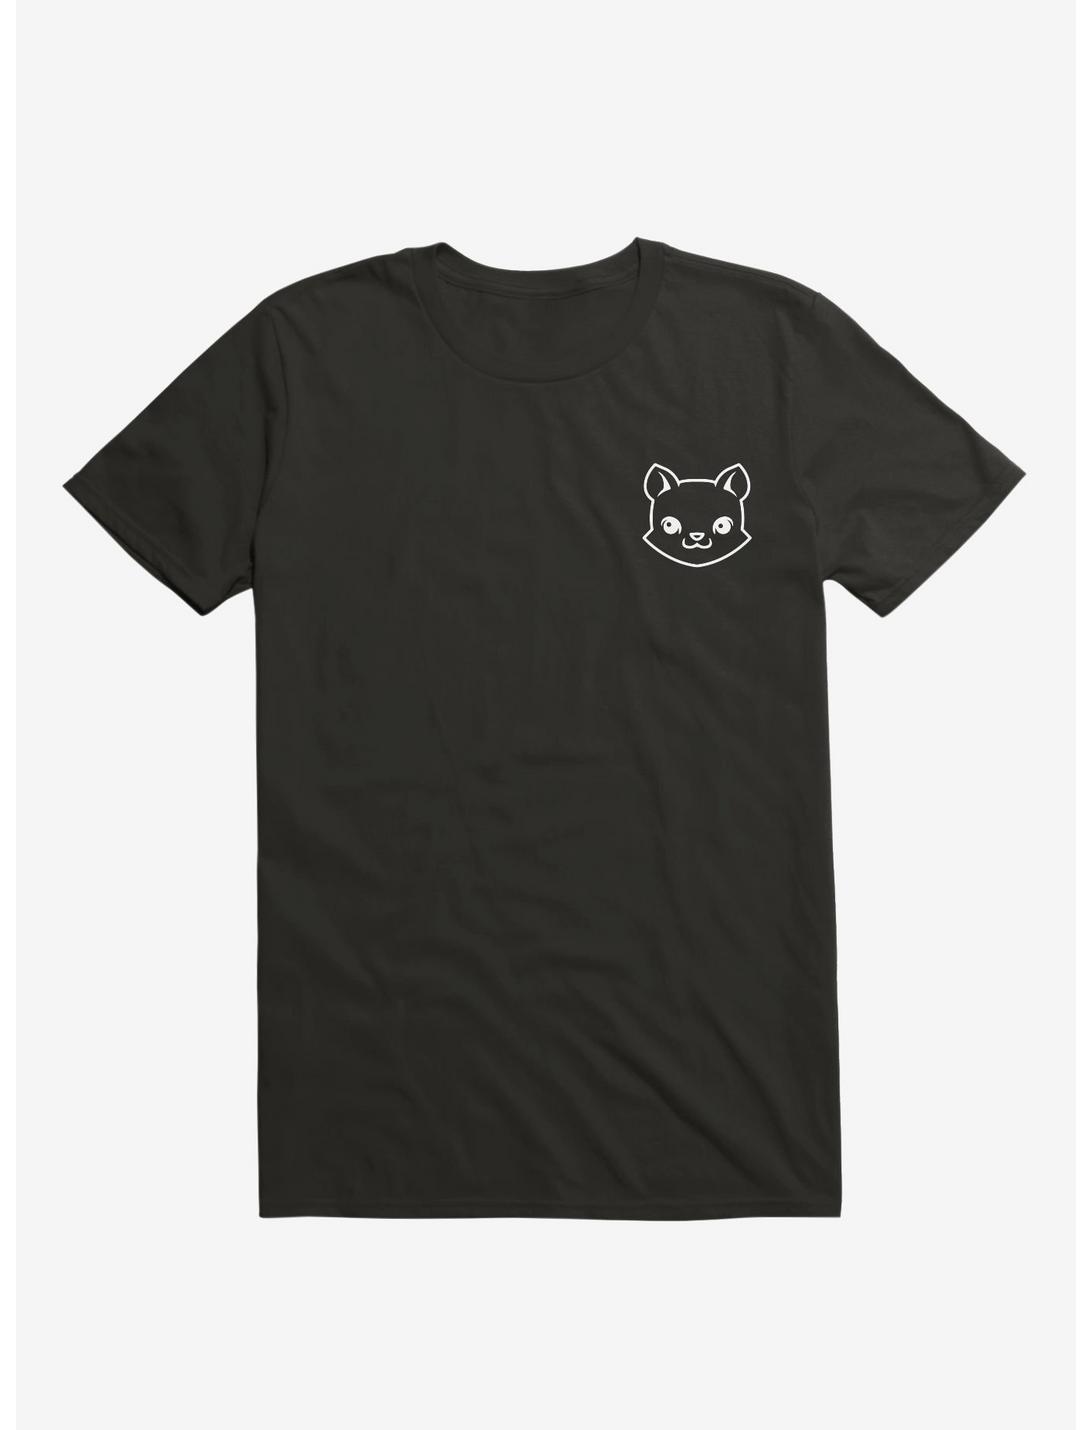 Cat Black and White Minimalist Pictogram - T-Shirt, BLACK, hi-res